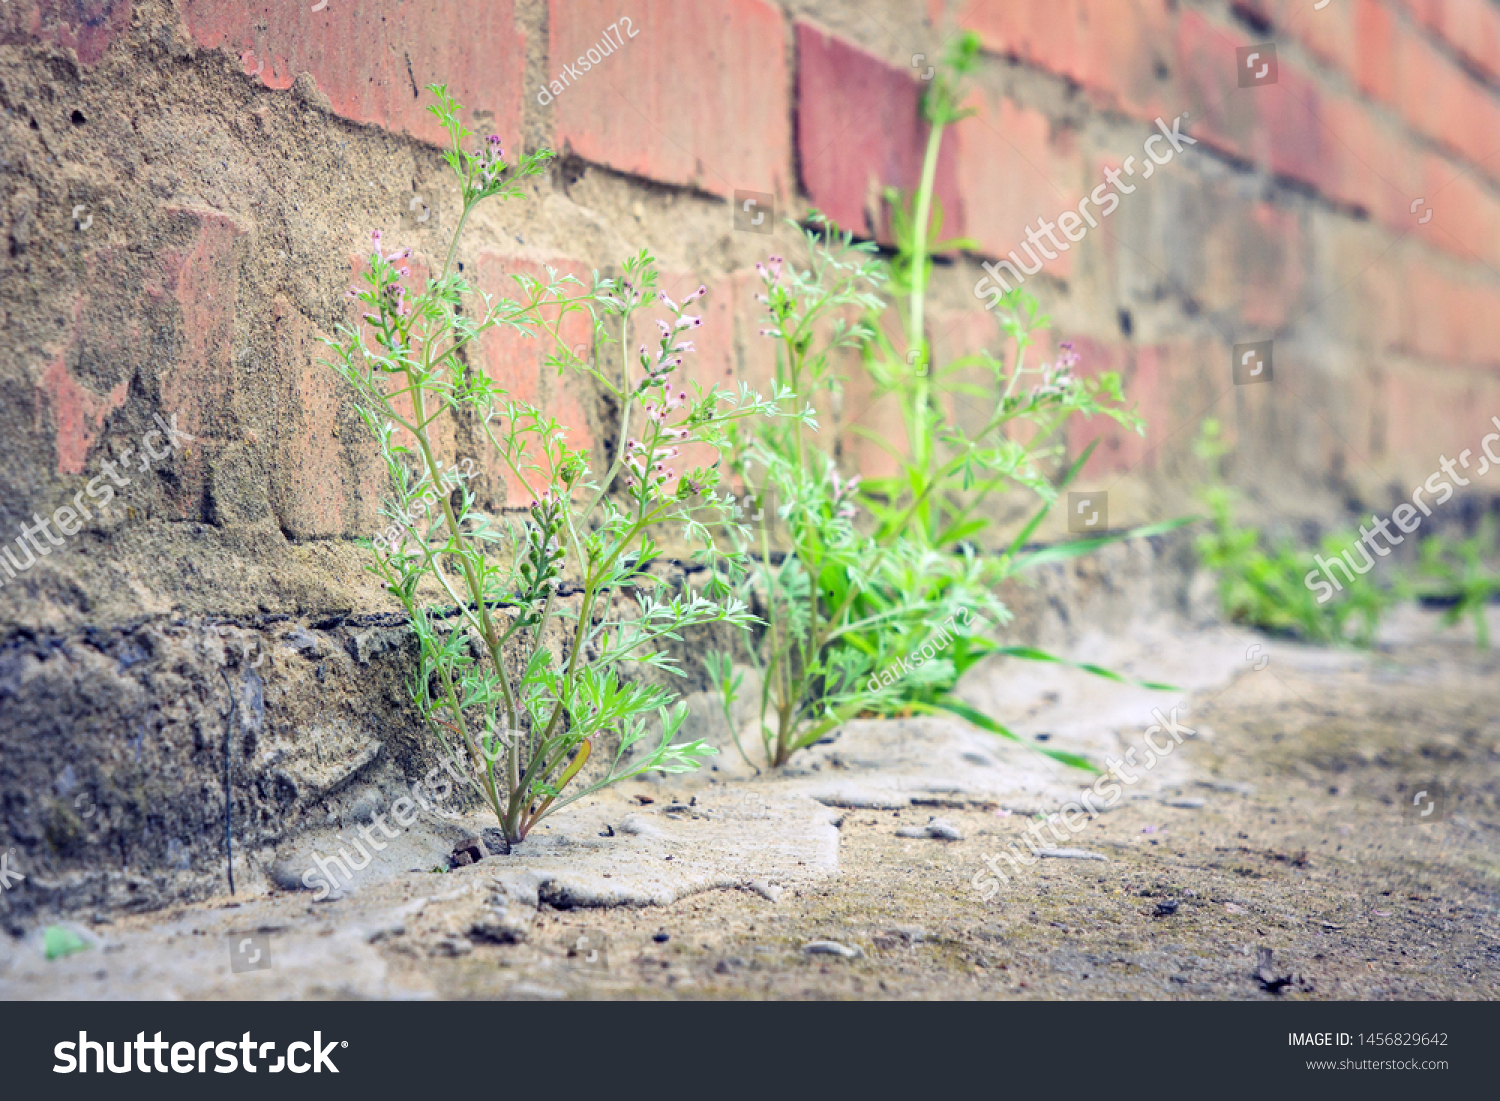 plant grows from concrete breaks through the asphalt #1456829642